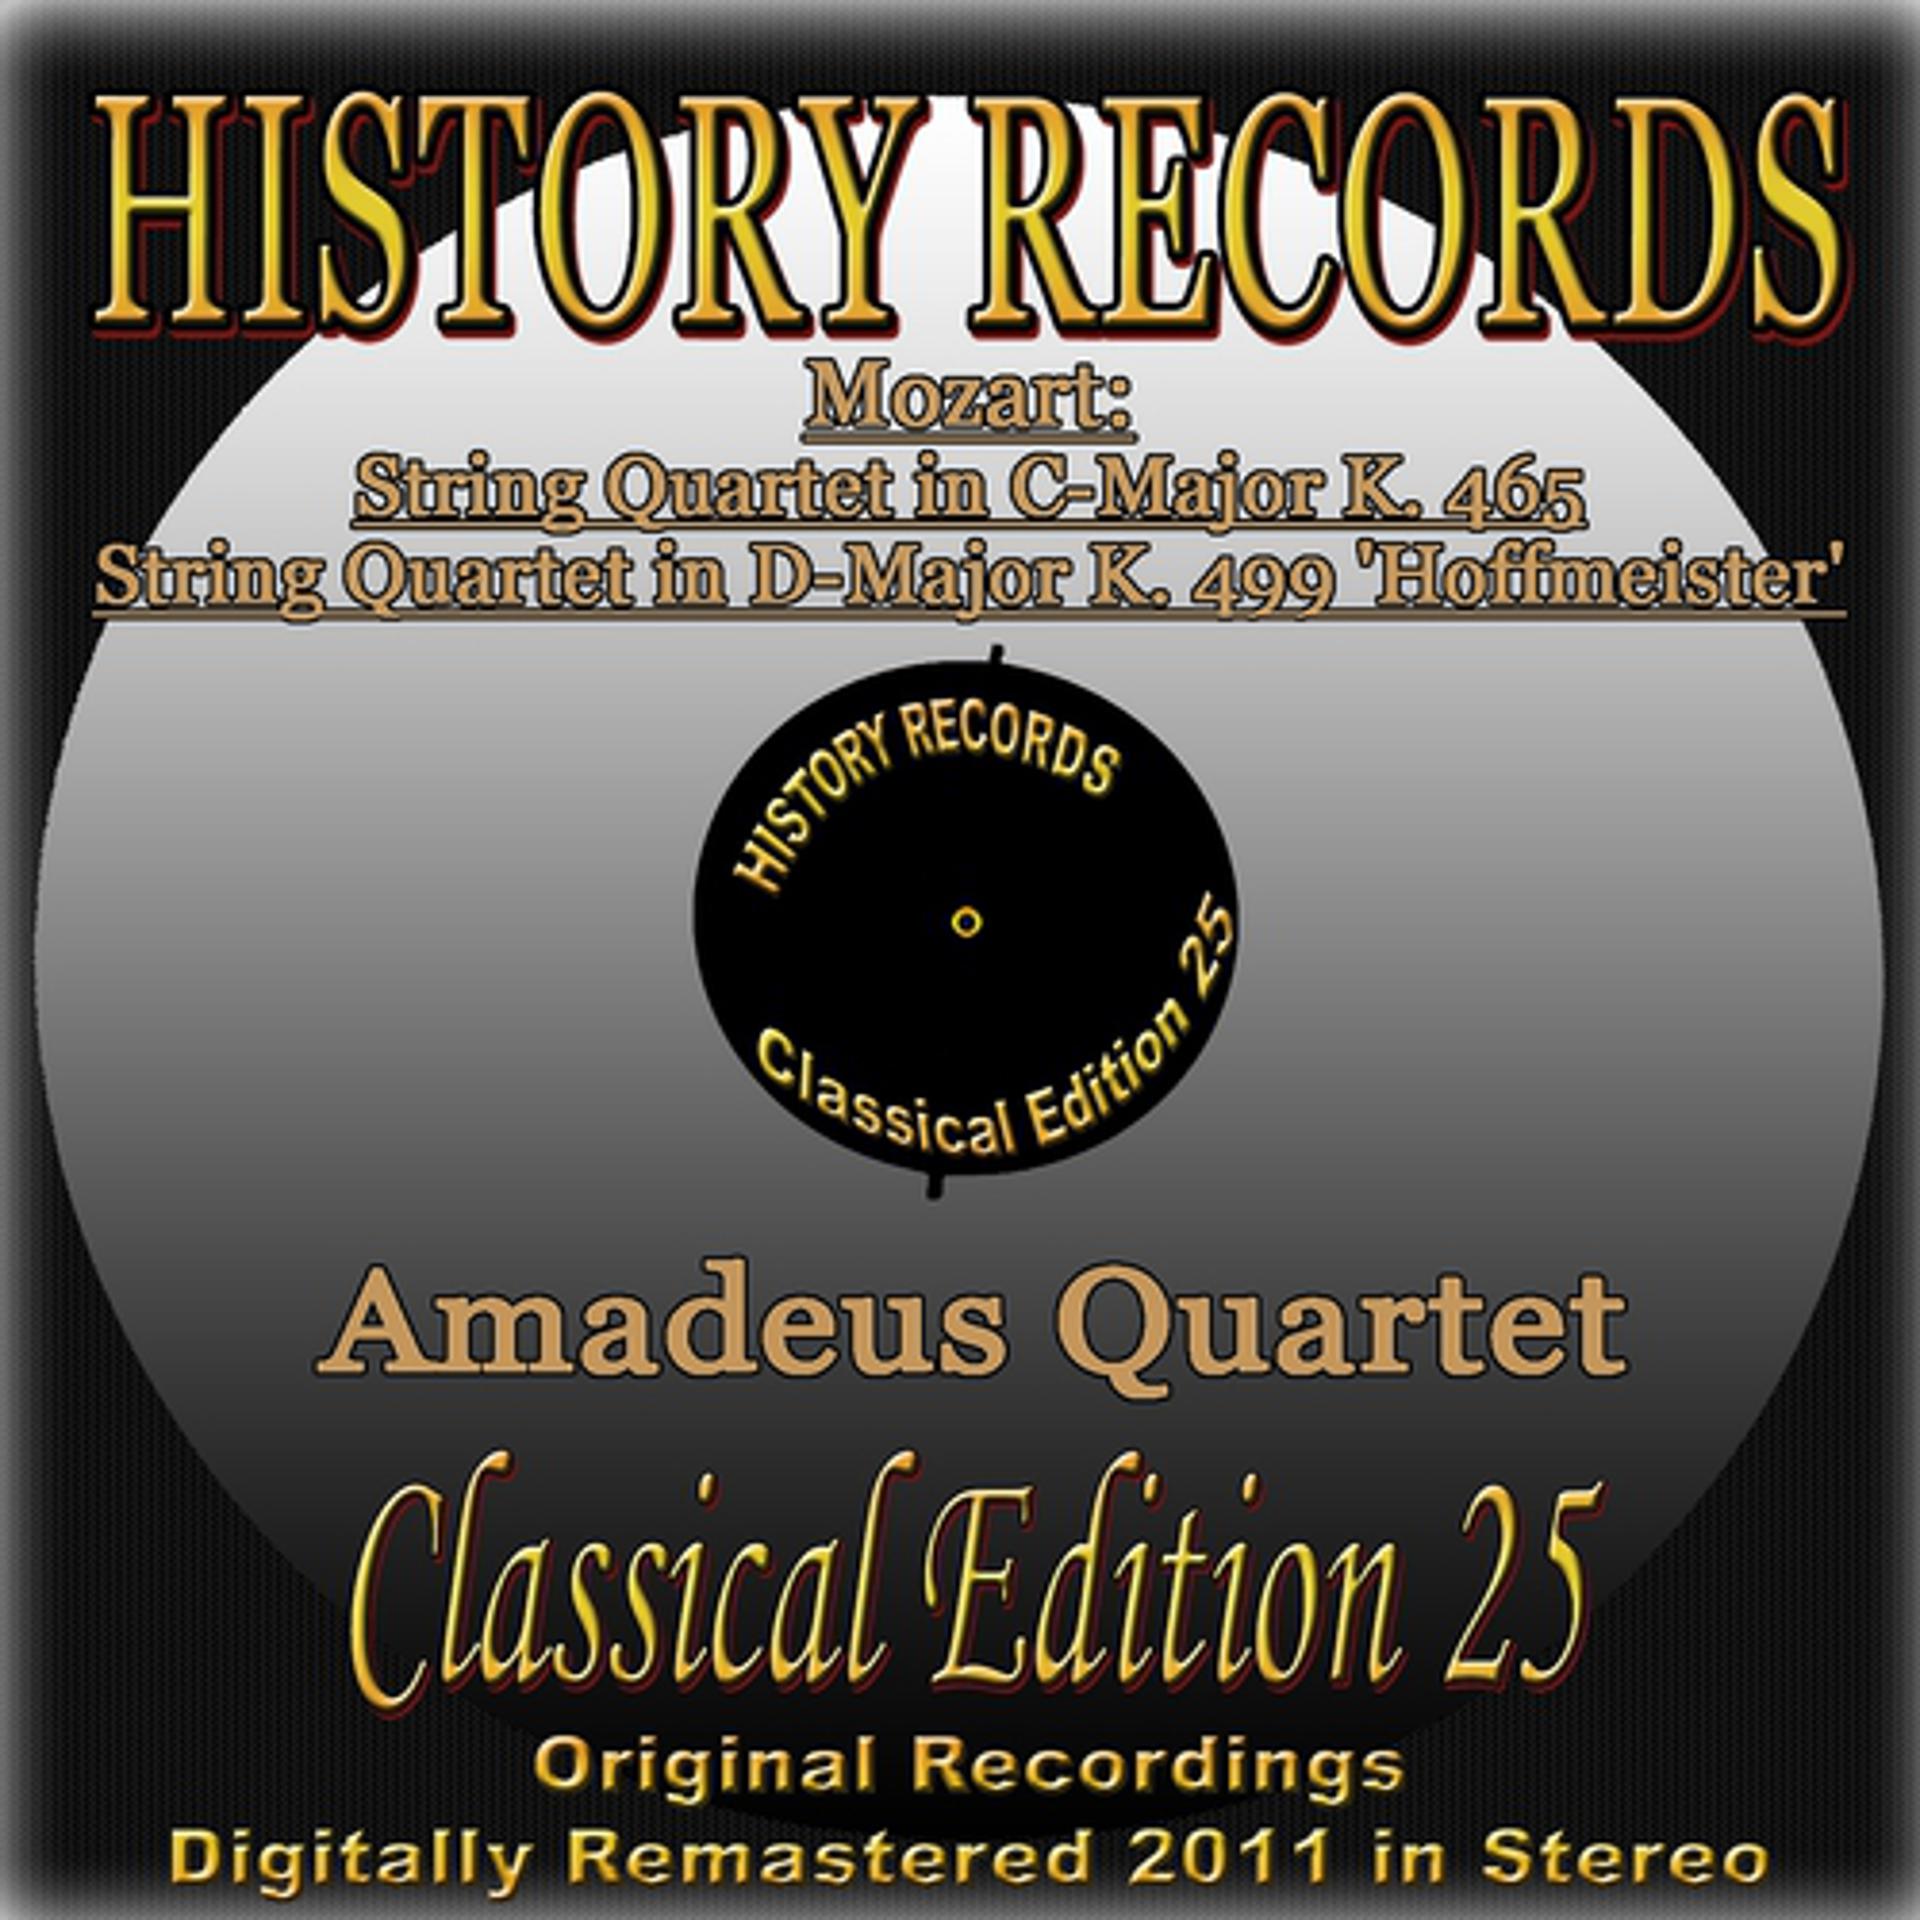 Постер альбома Mozart: String Quartet in C-Major K. 465 & String Quartet in D-Major K. 499 'Hoffmeister' (History Records - Classical Edition 25 - Digitally Remastered 2011)